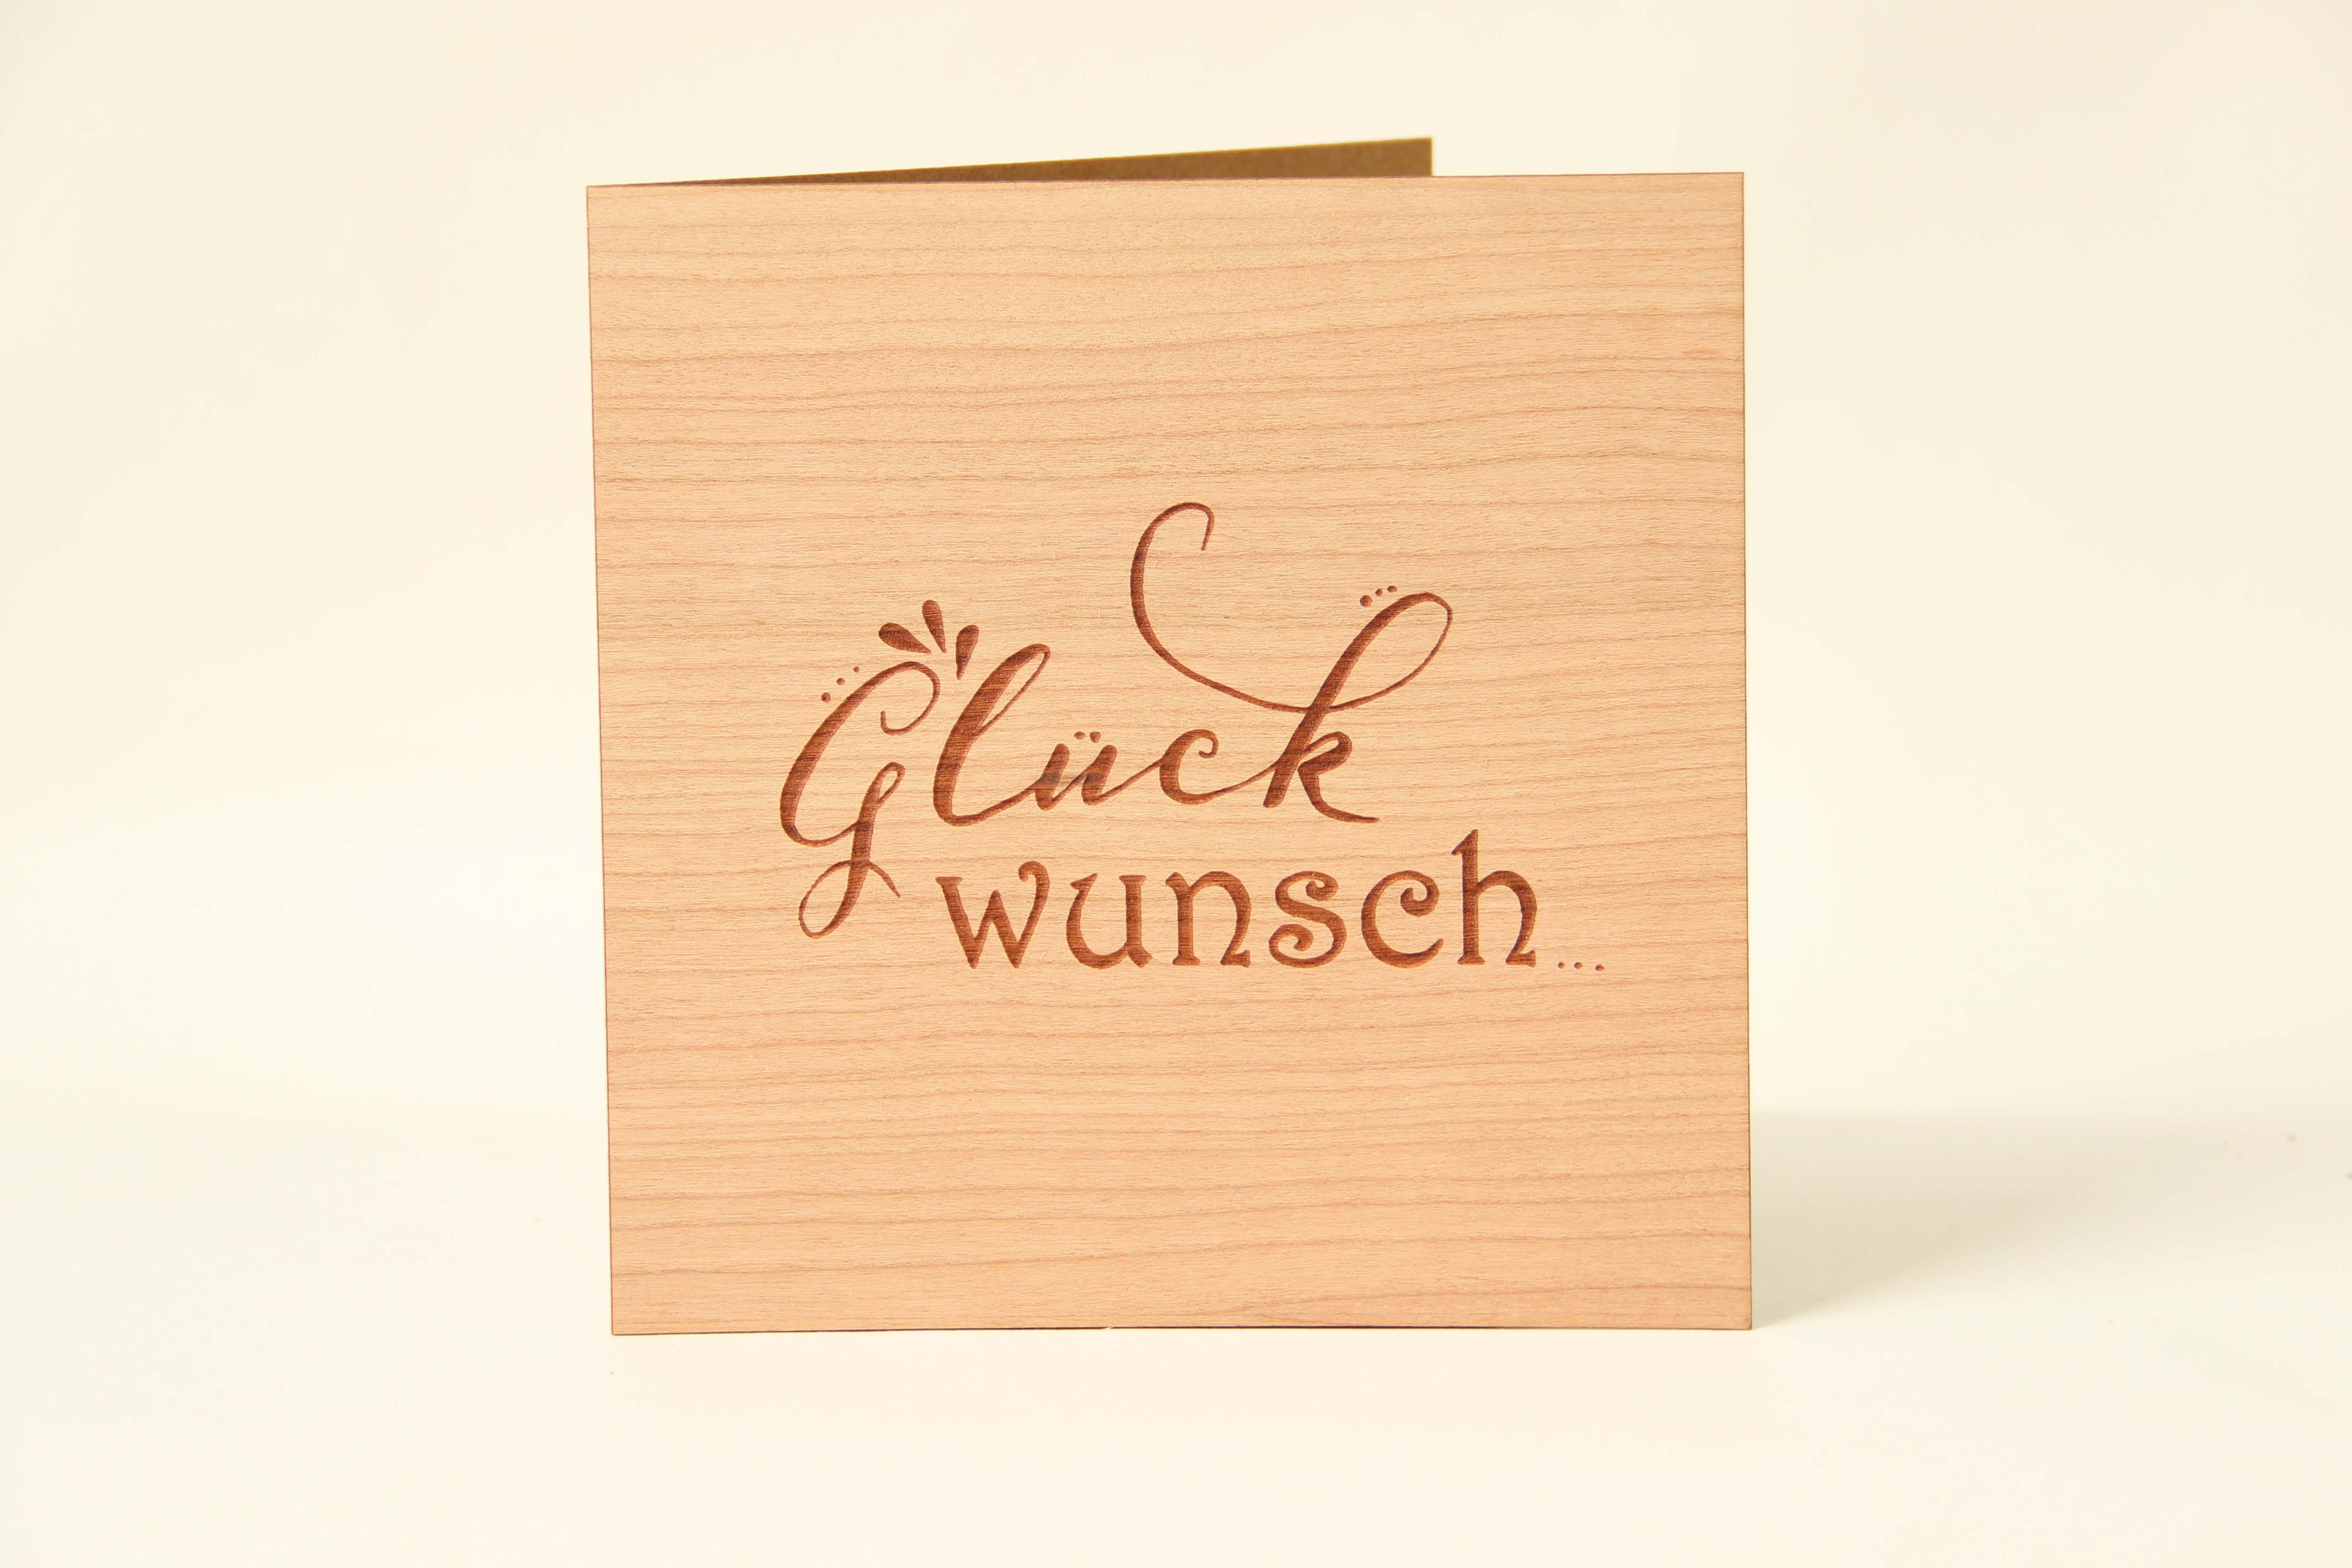 Holzgrusskarten - Holzgrusskarte Geburtstag "Glückwunsch", Kirsche